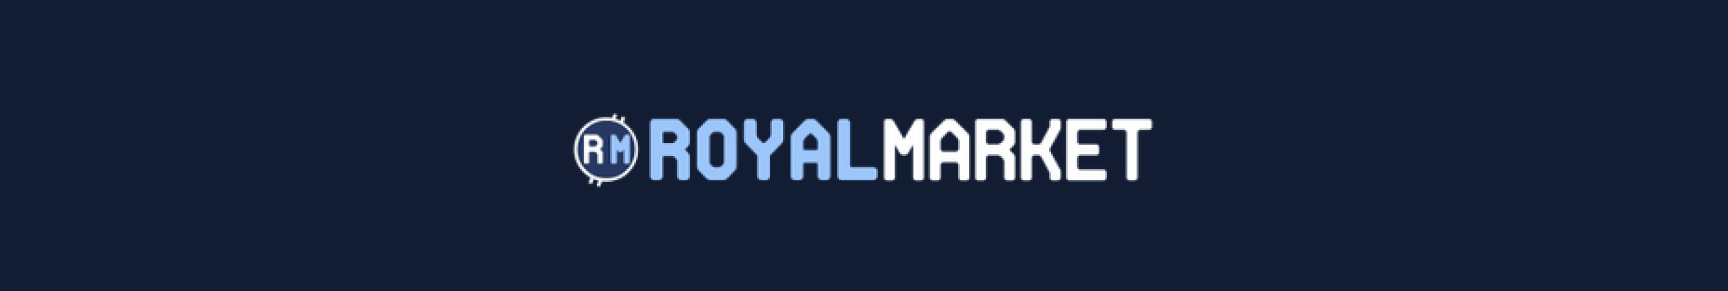 Royal Market